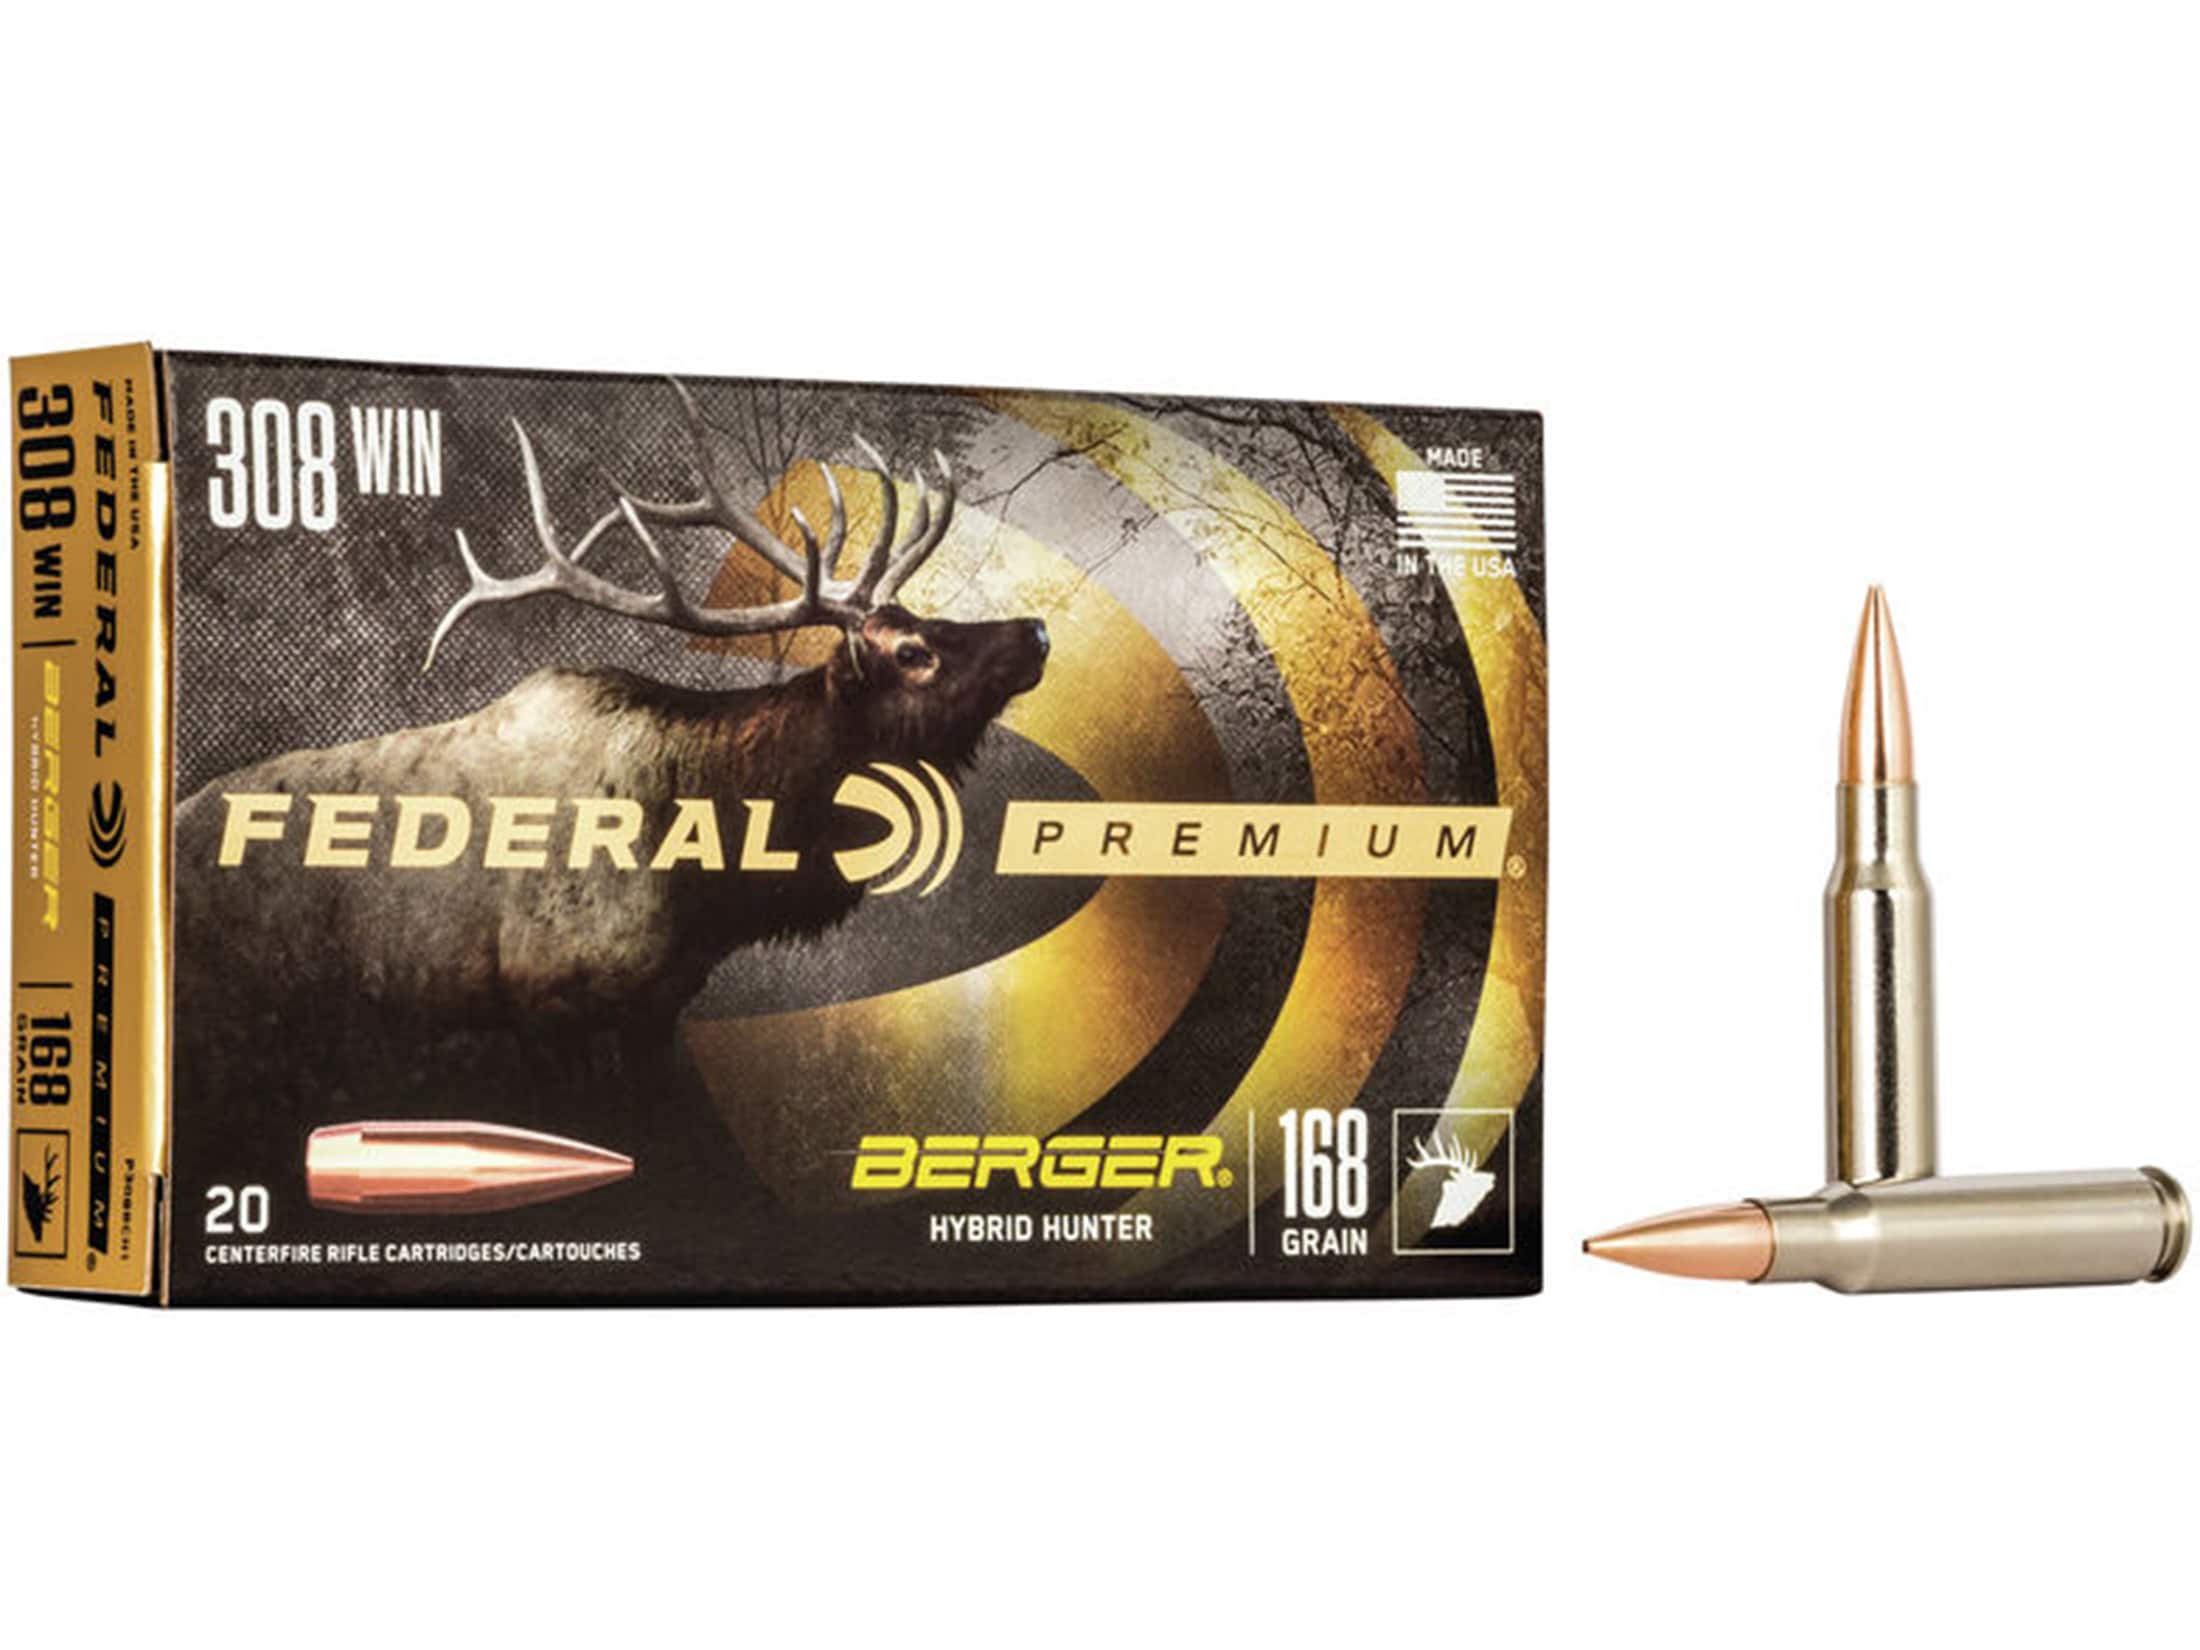 Federal Premium Ammunition 308 Winchester 168 Grain Berger Hybrid Hunter